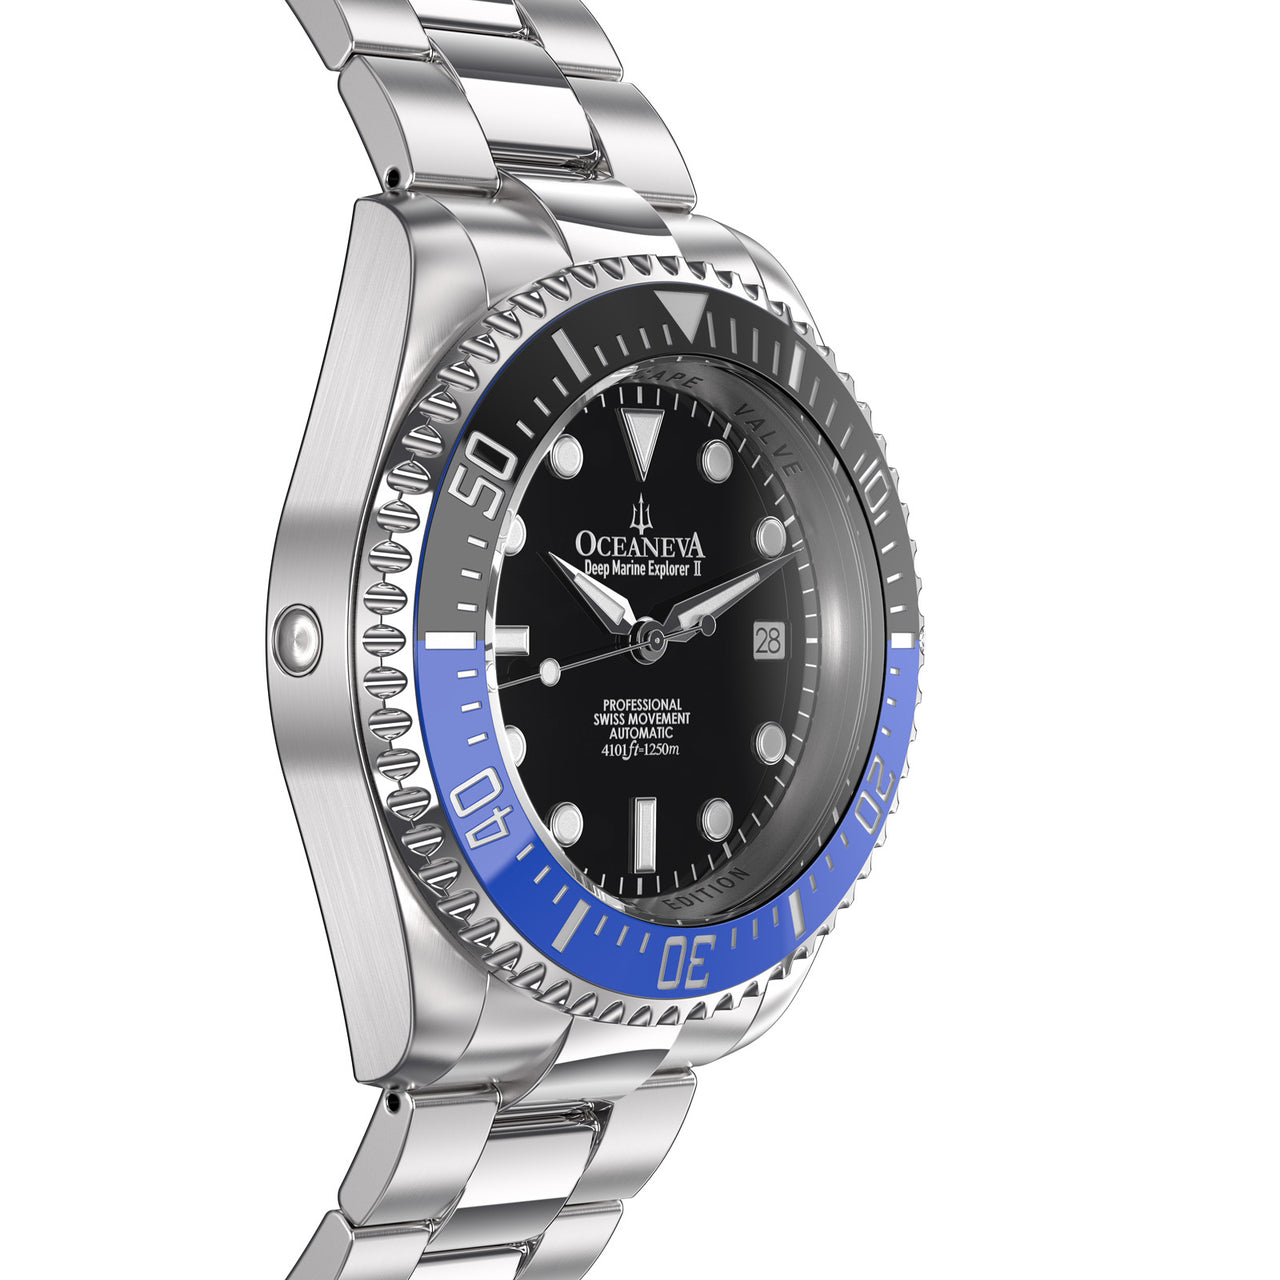 Oceaneva 1250M Dive Watch Blue and Black Side Helium Escape Valve View